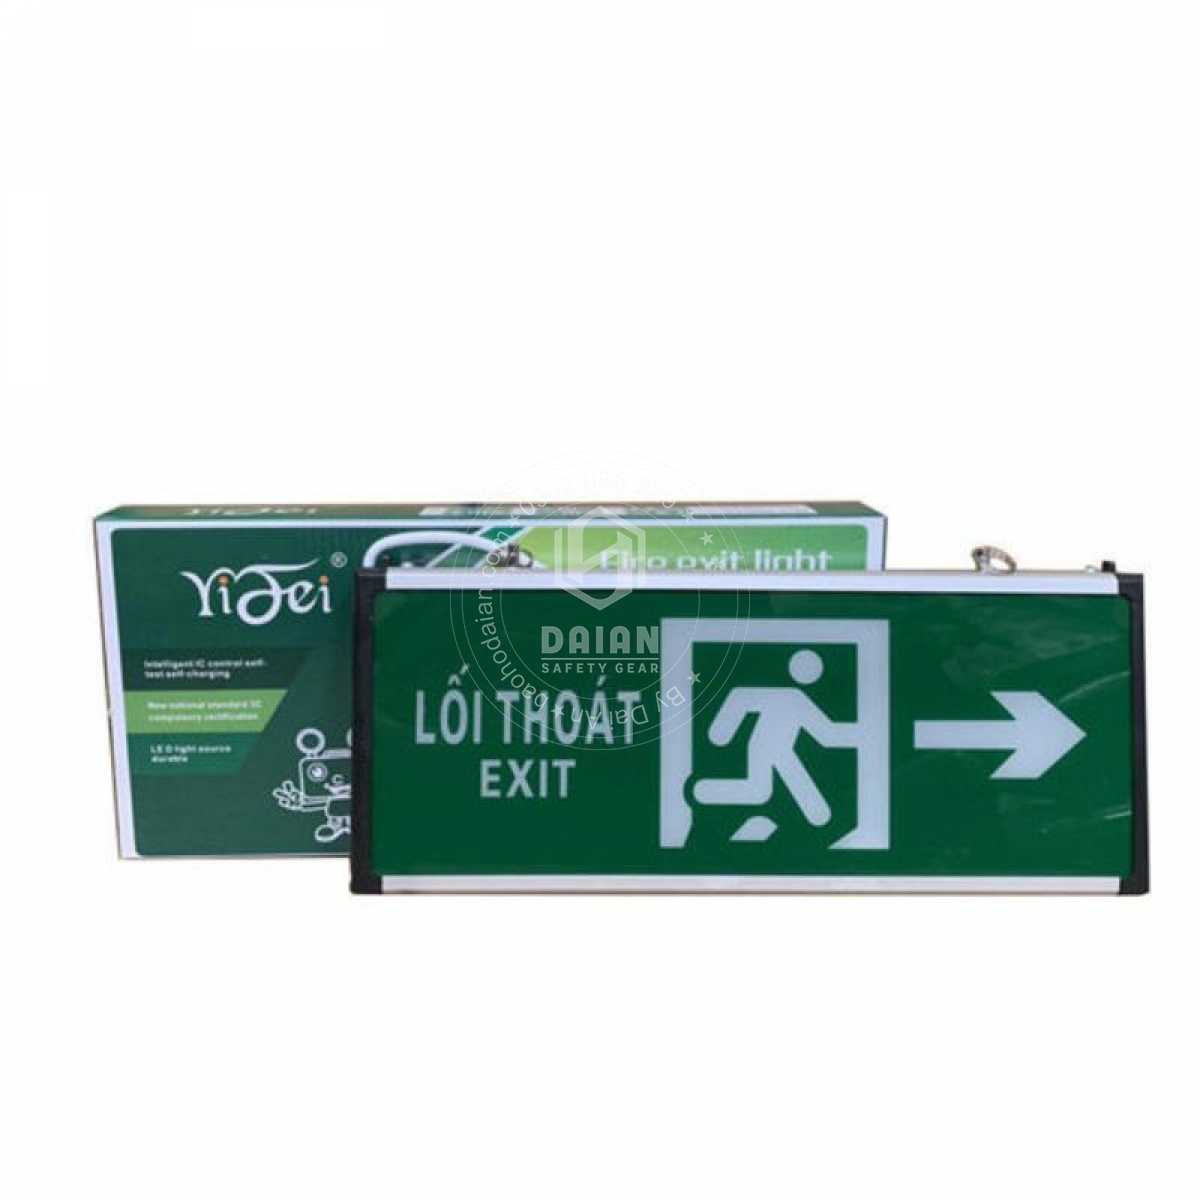 den-exit-thoat-hiem-yf1018-chi-mot-huong